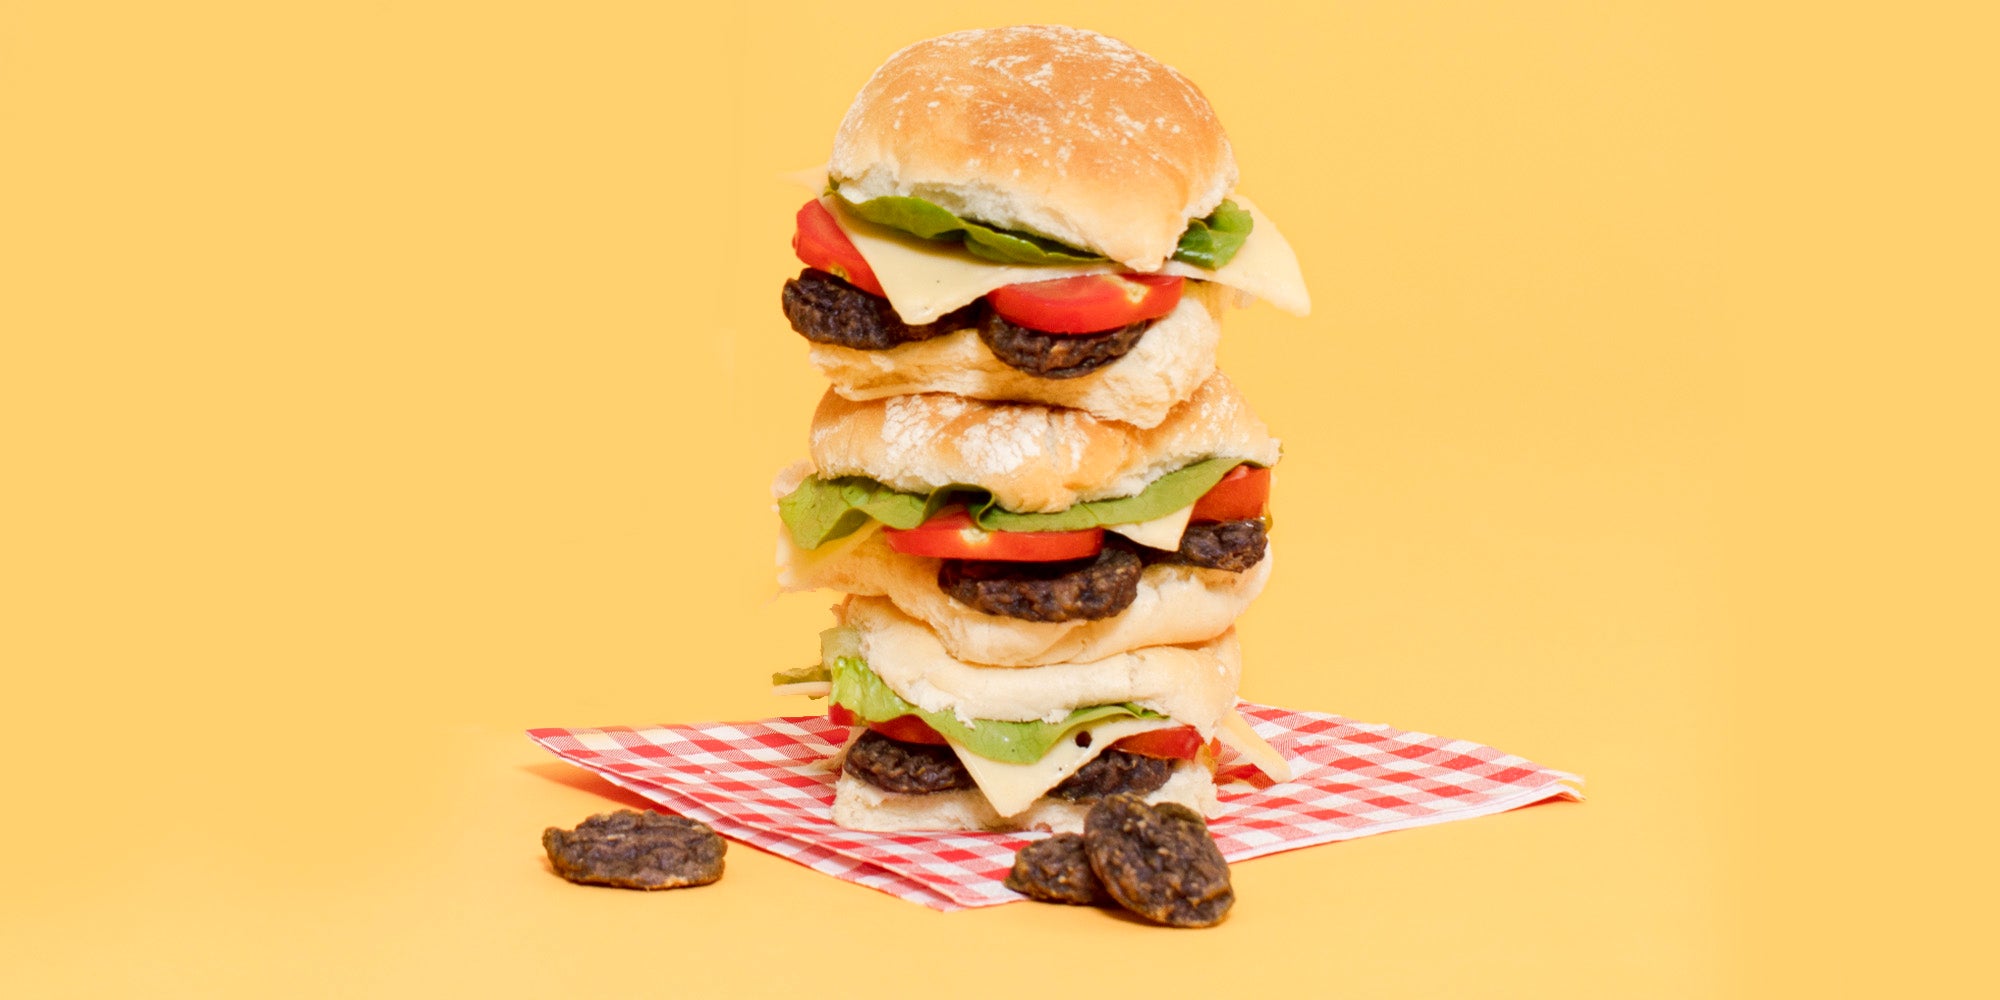 A burger made of Pooch & Mutt Smokin' BBQ Burgers on an orange background